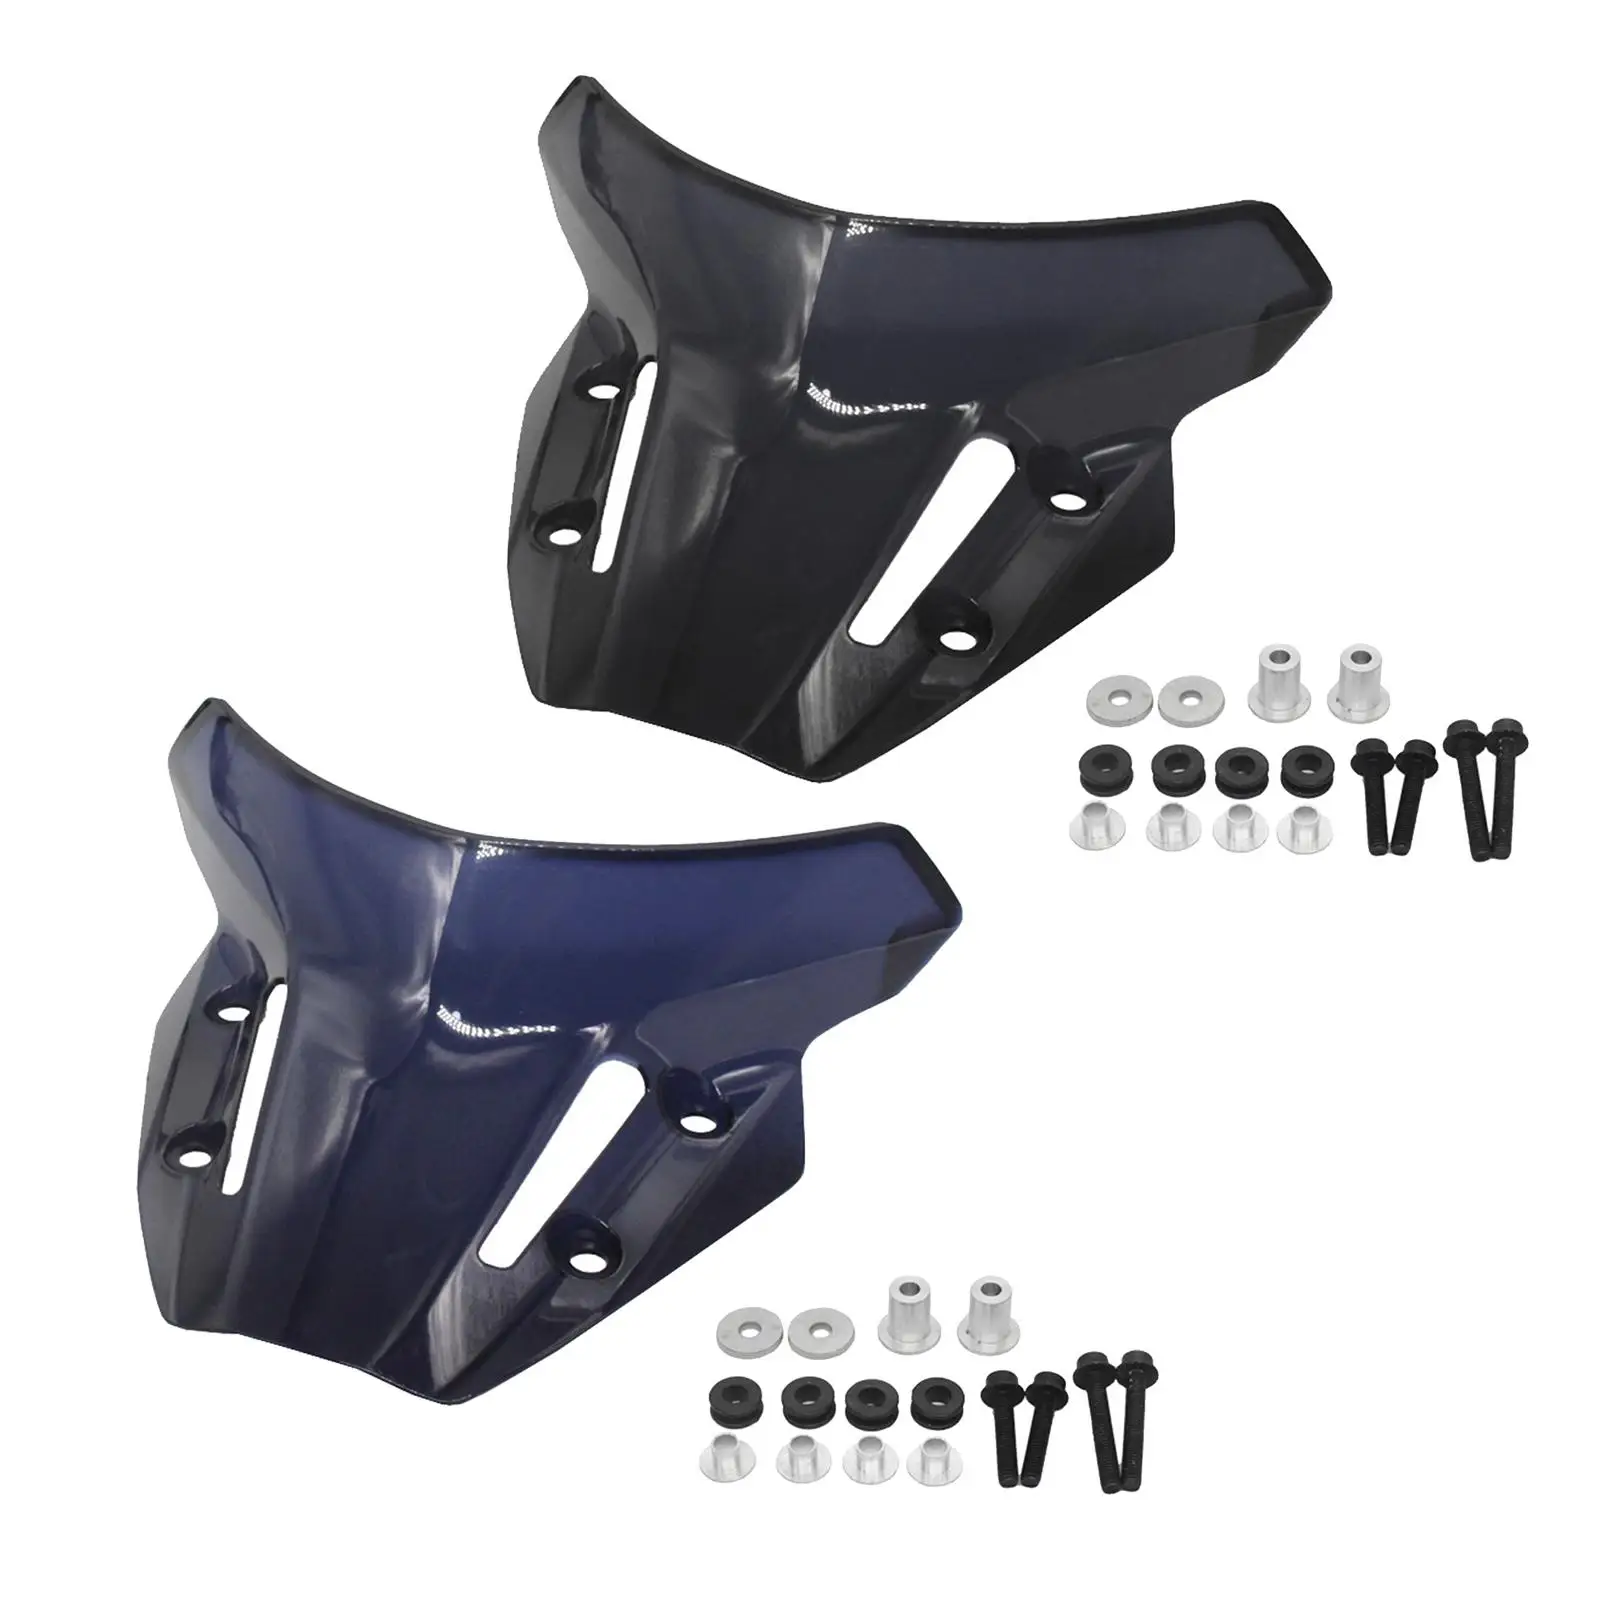  Windshield,  Accessories, Motorbike Wind Deflector, Front Fairing Windscreen for  FZ09 Professional